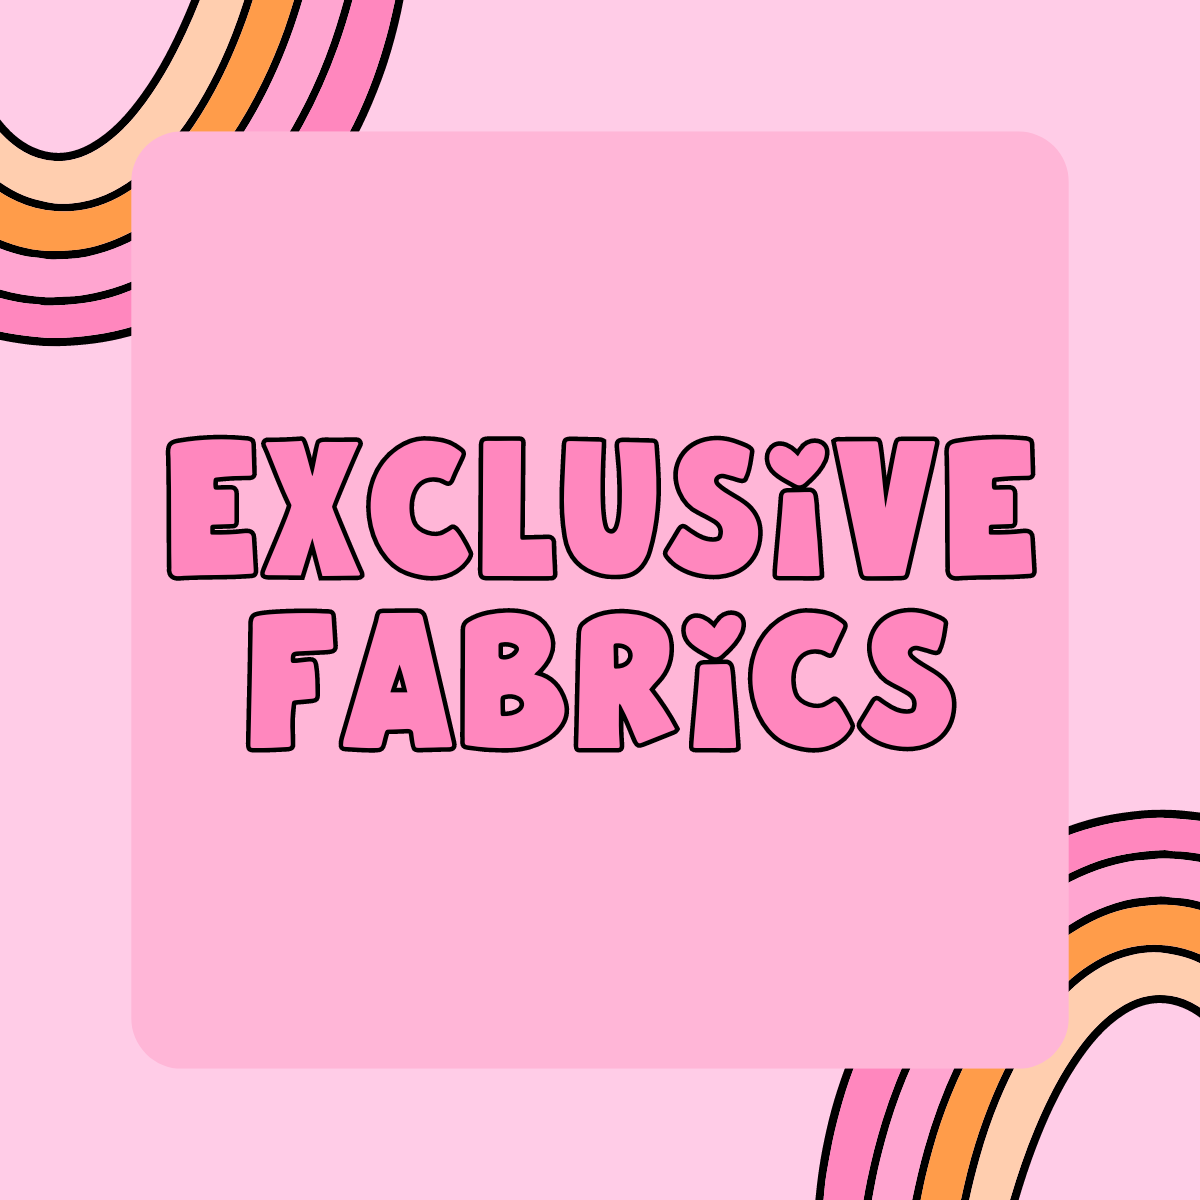 Exclusive custom fabrics!